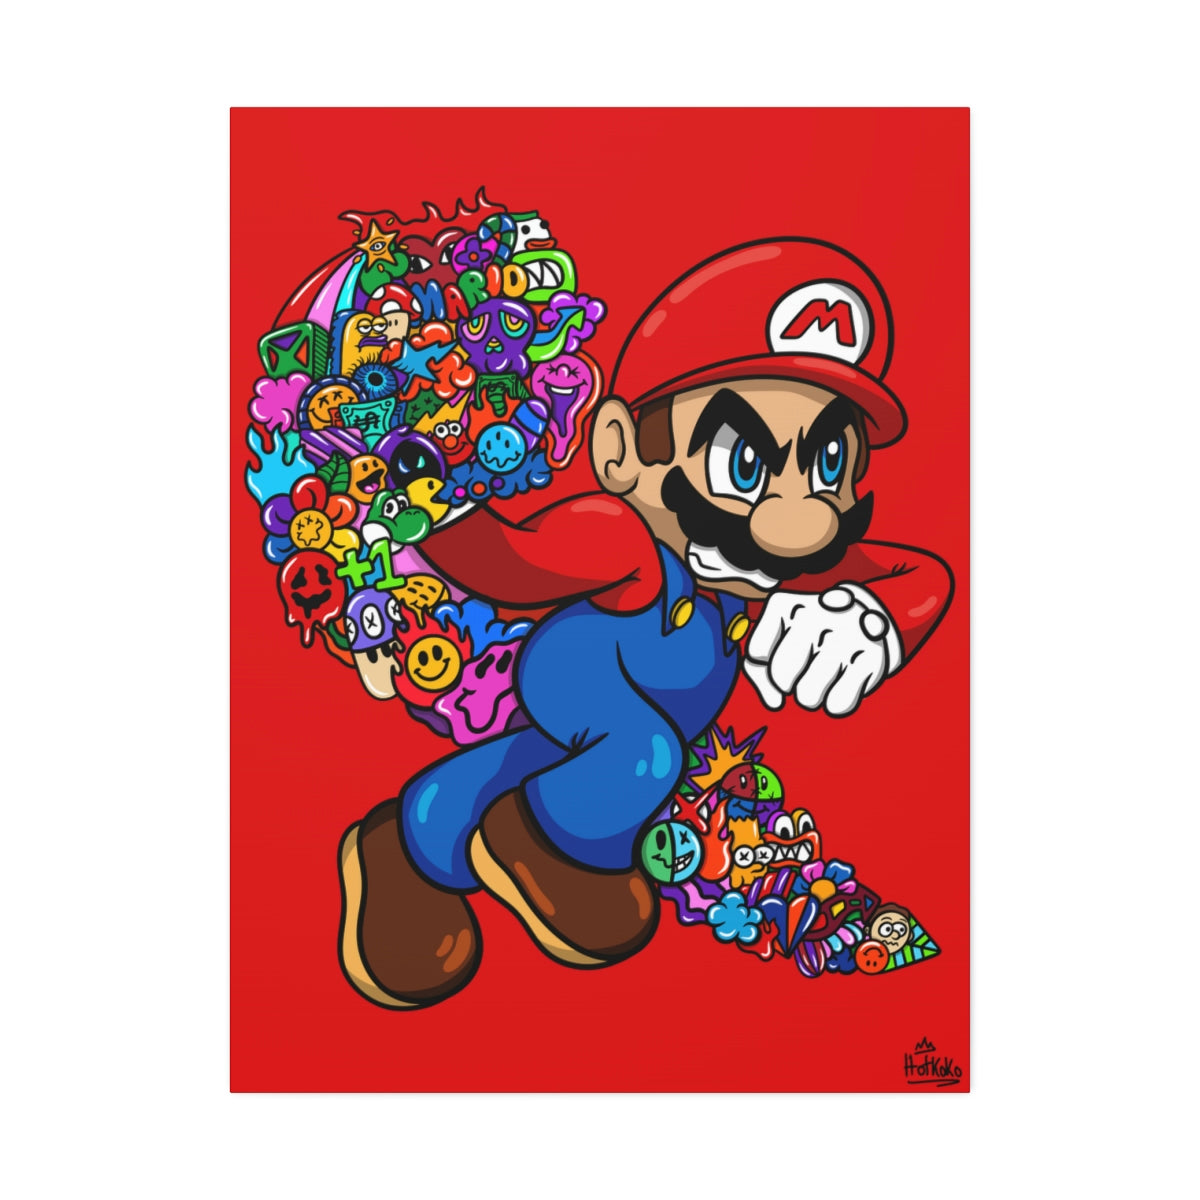 Super Mario Doodle Artwork